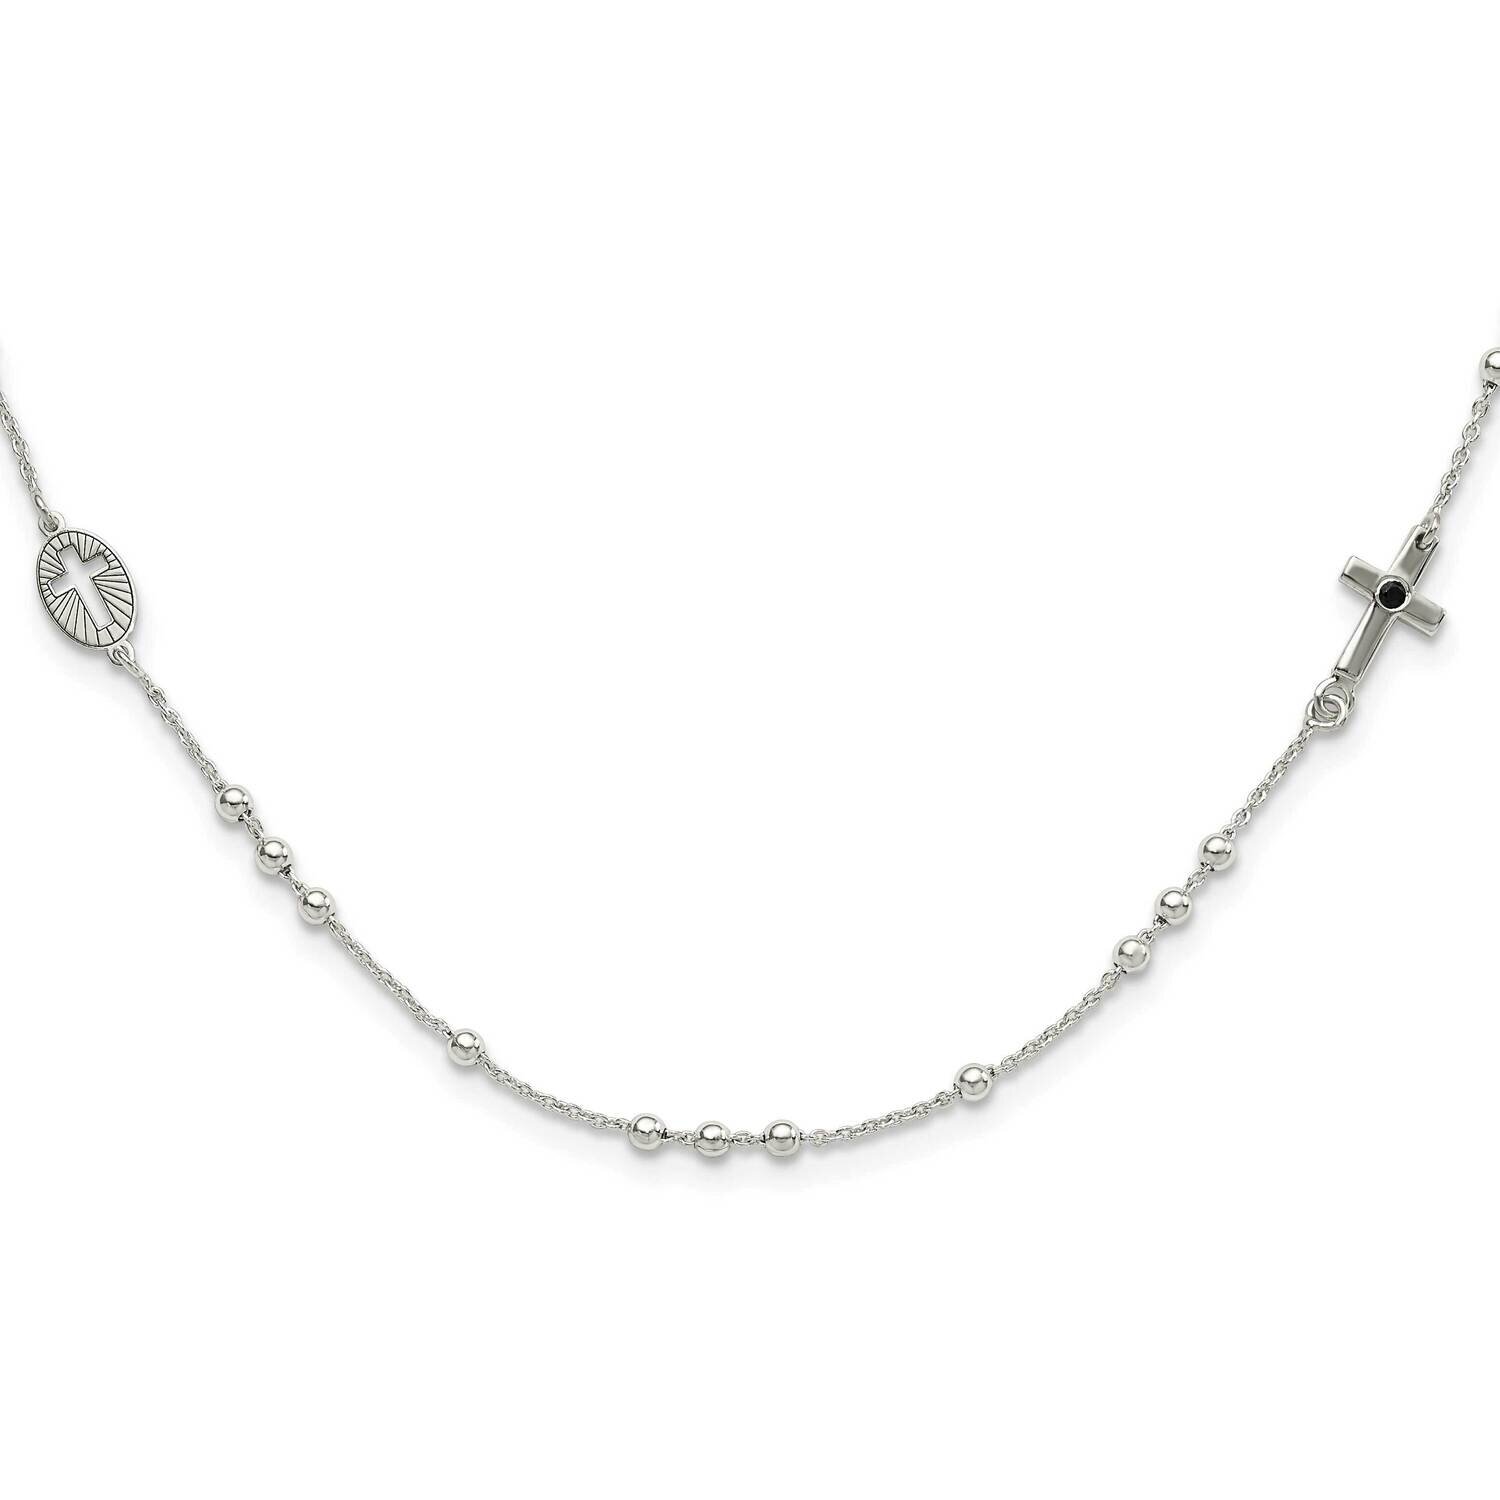 Black CZ Diamond Beaded Cross Necklace 16 Inch Sterling Silver QG6053-16